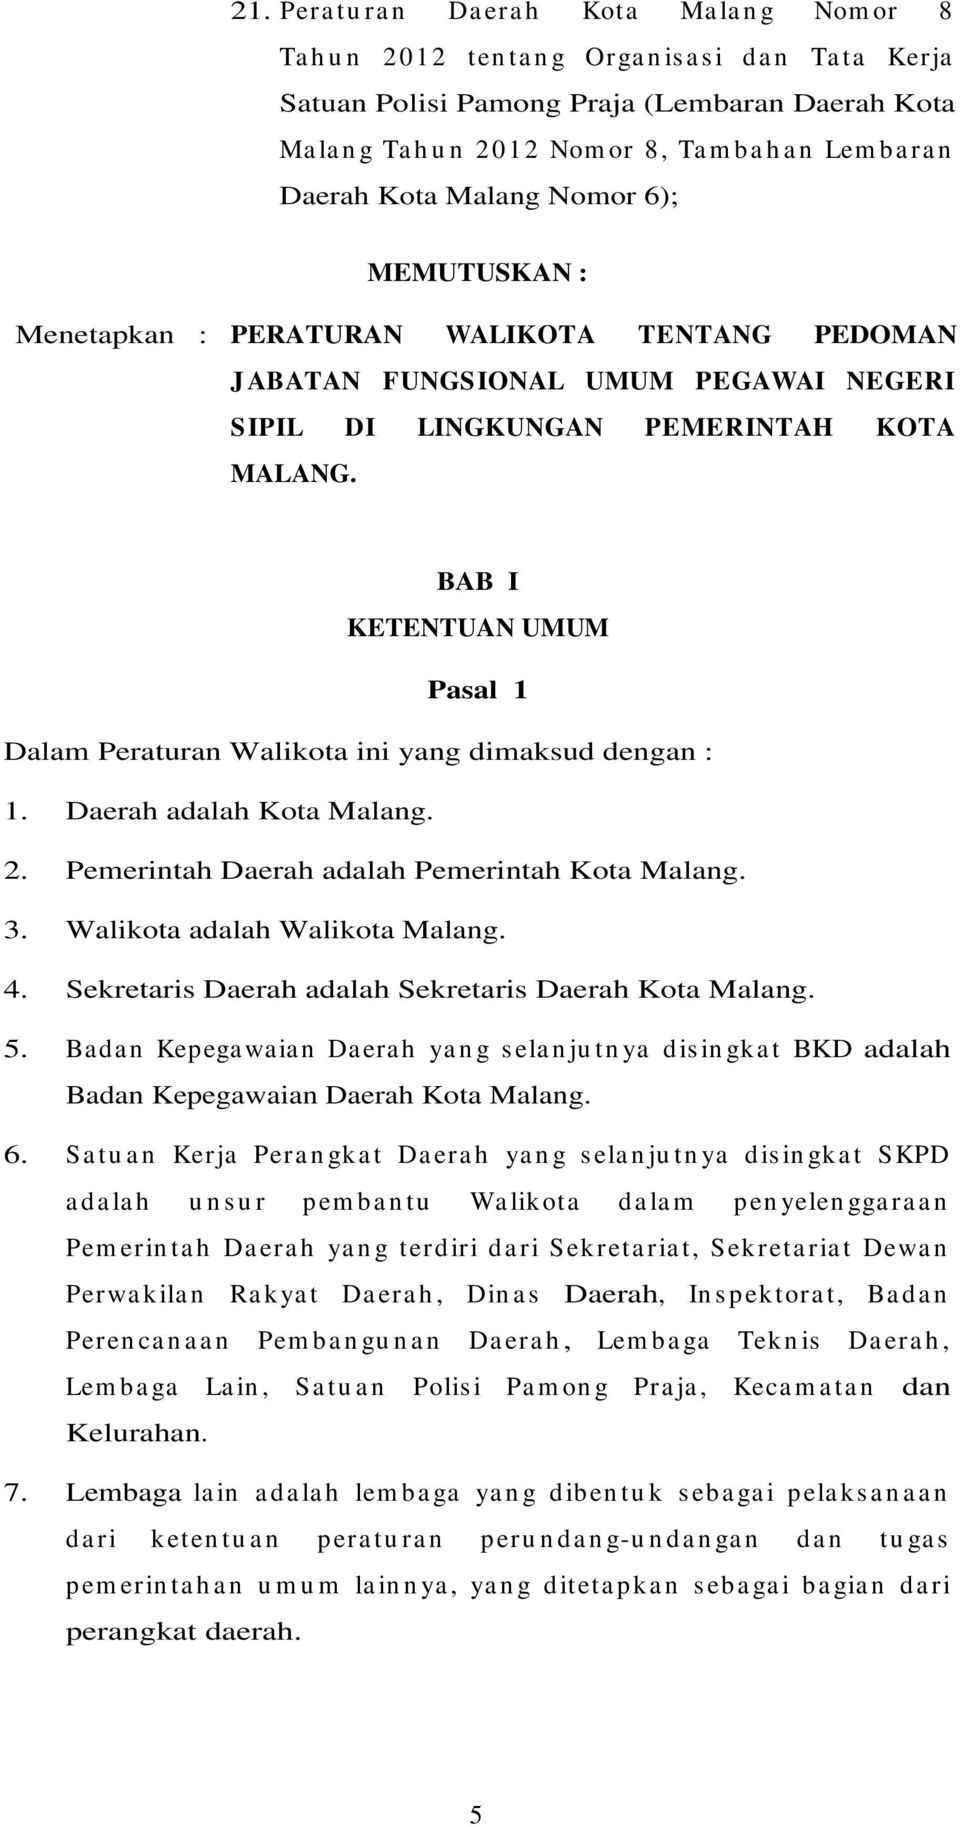 BAB I KETENTUAN UMUM Pasal 1 Dalam Peraturan Walikota ini yang dimaksud dengan : 1. Daerah adalah Kota Malang. 2. Pemerintah Daerah adalah Pemerintah Kota Malang. 3. Walikota adalah Walikota Malang.